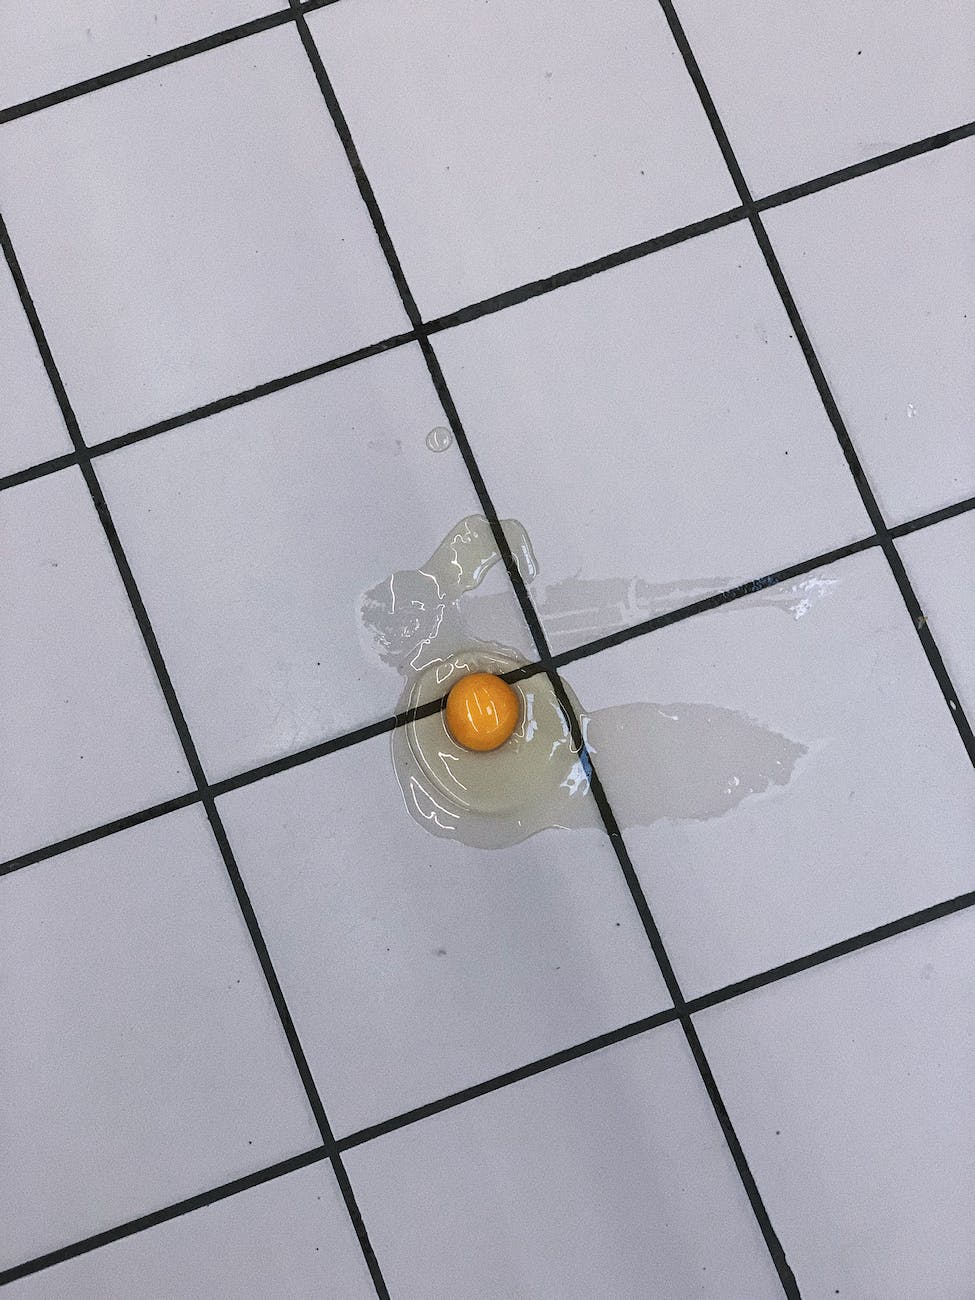 broken egg without shell on tiled floor